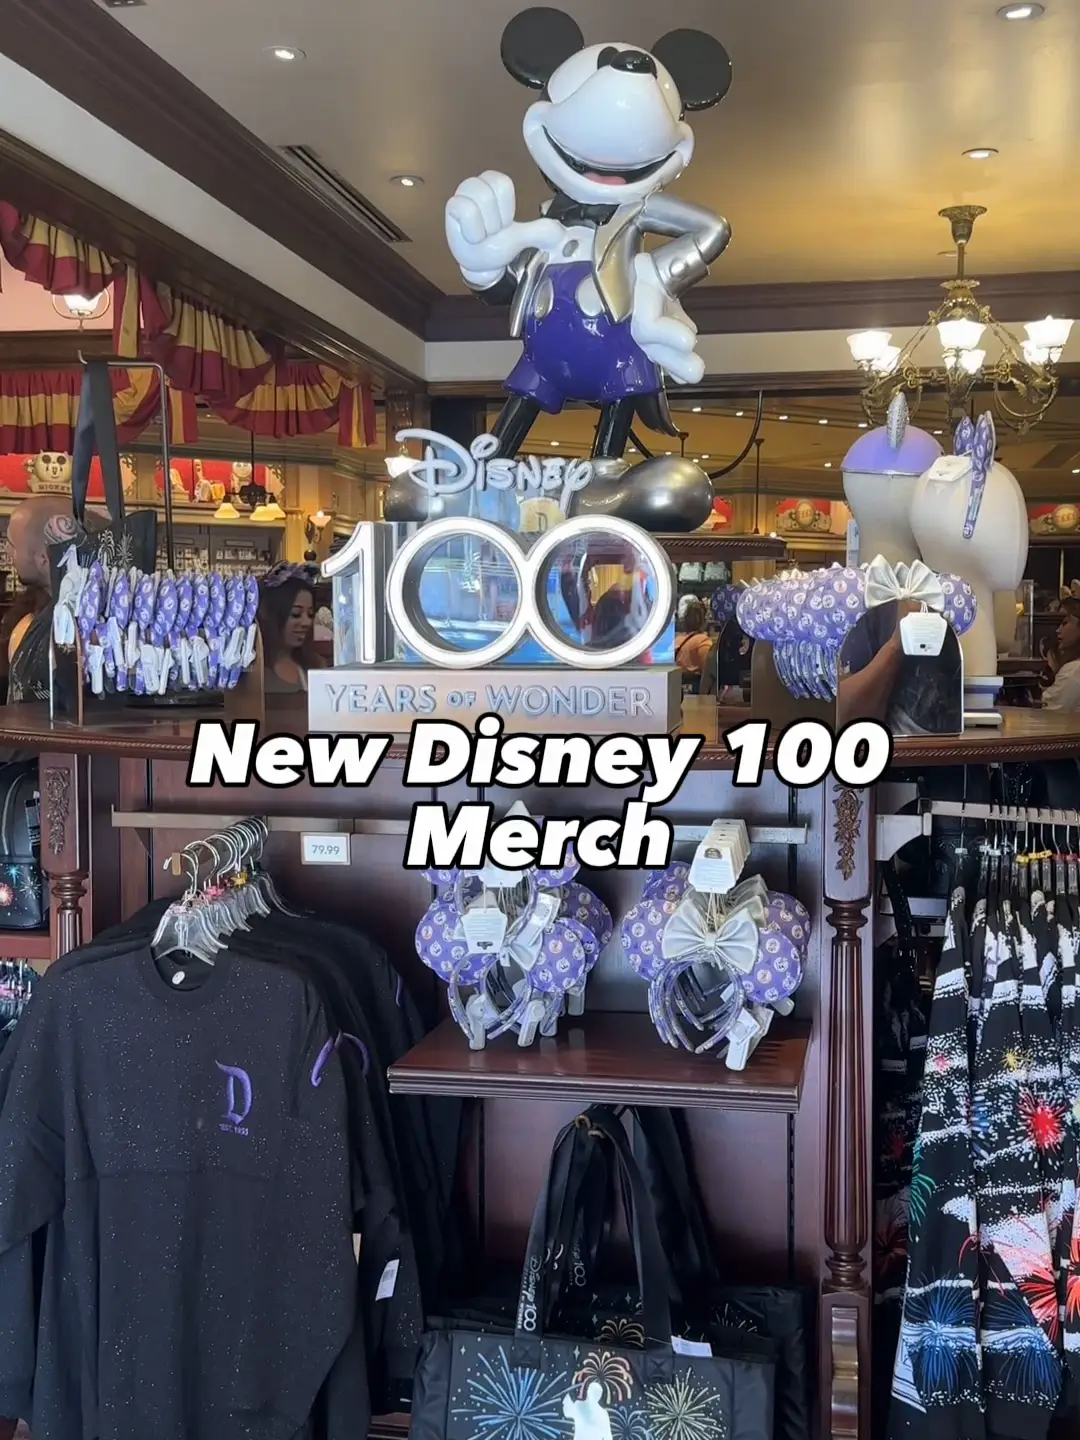 Disney 100th Anniversary!!✨ #disney100#disney100yearsofwonder